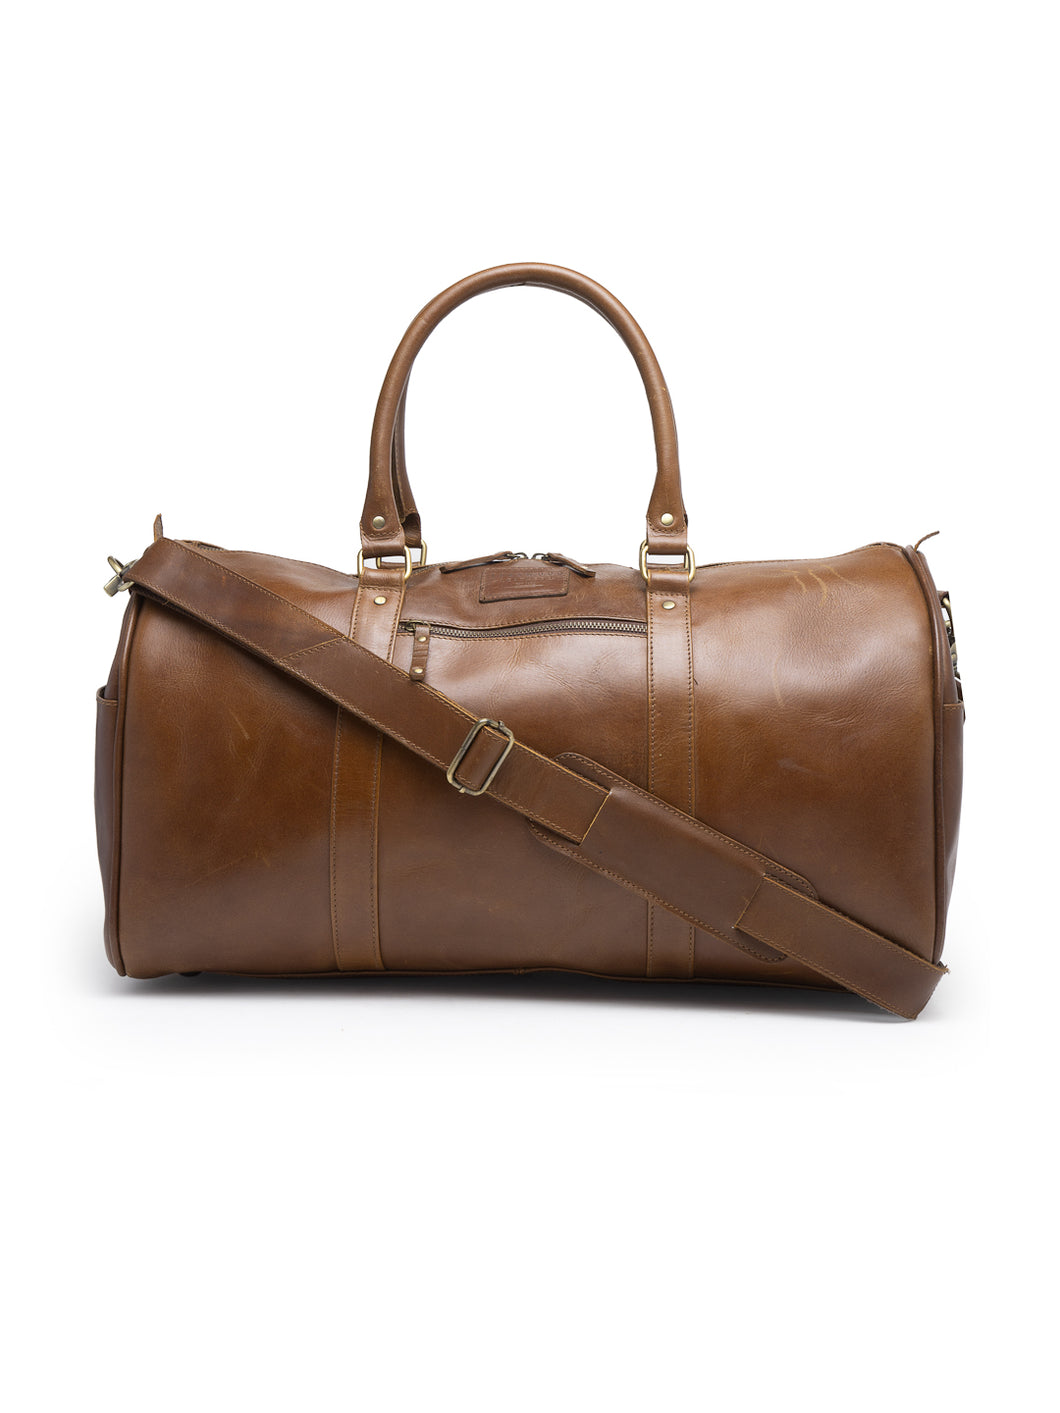 Teakwood Unisex Genuine Leather Duffel Travel Bag || Travelling Bag for Men/Women